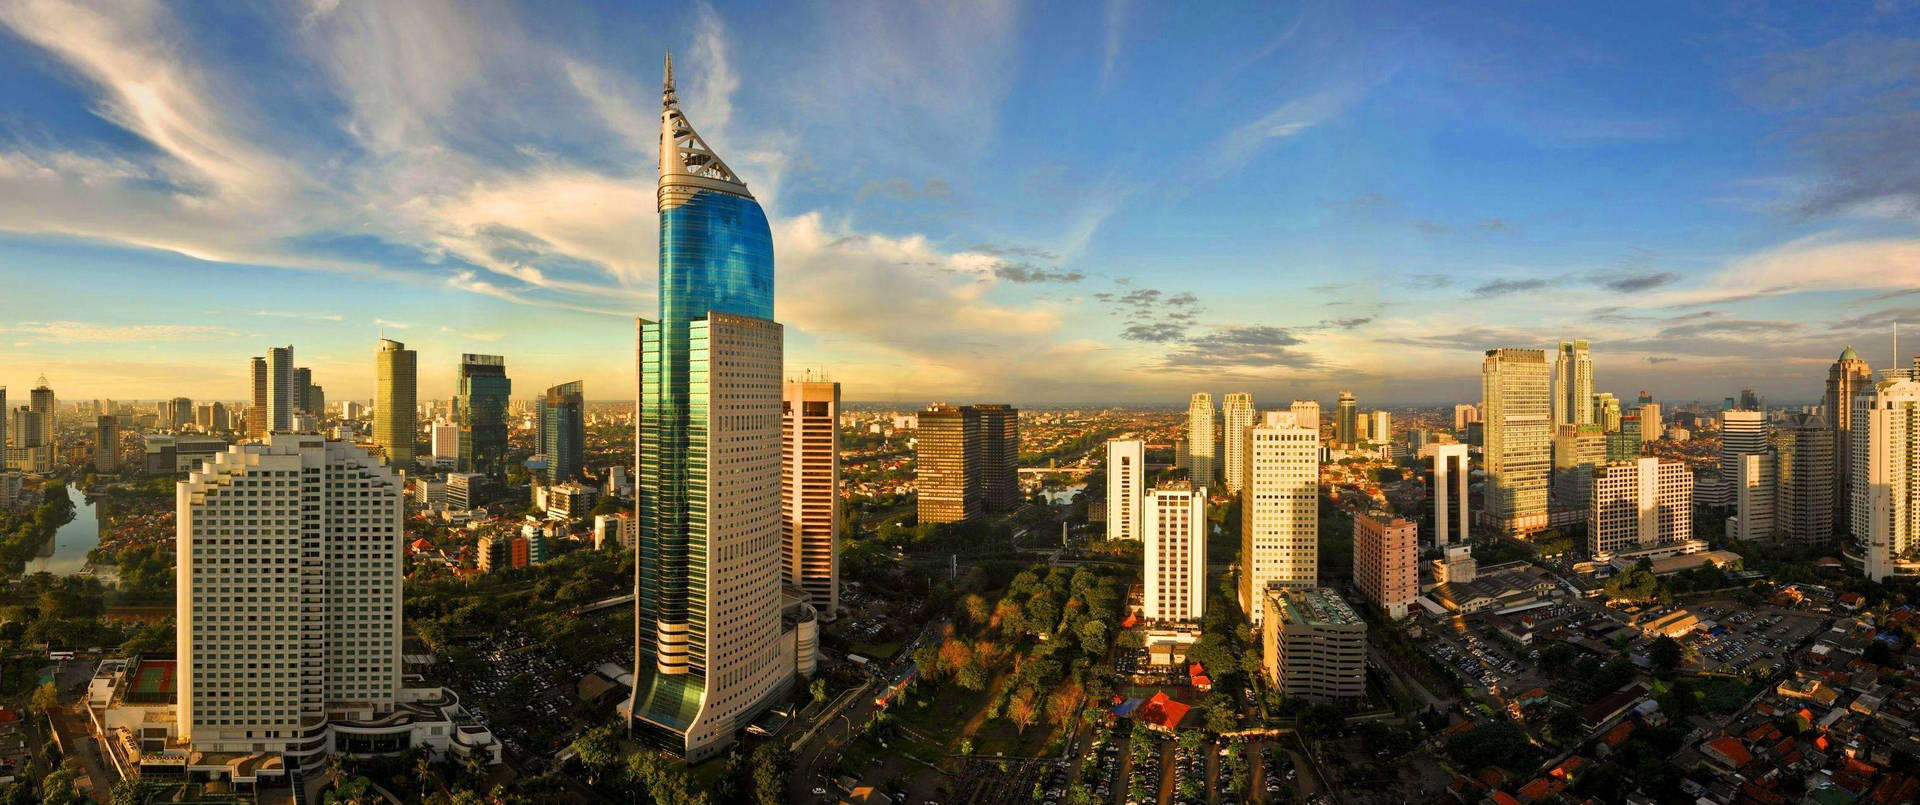 Jakarta Wisma 46 Background